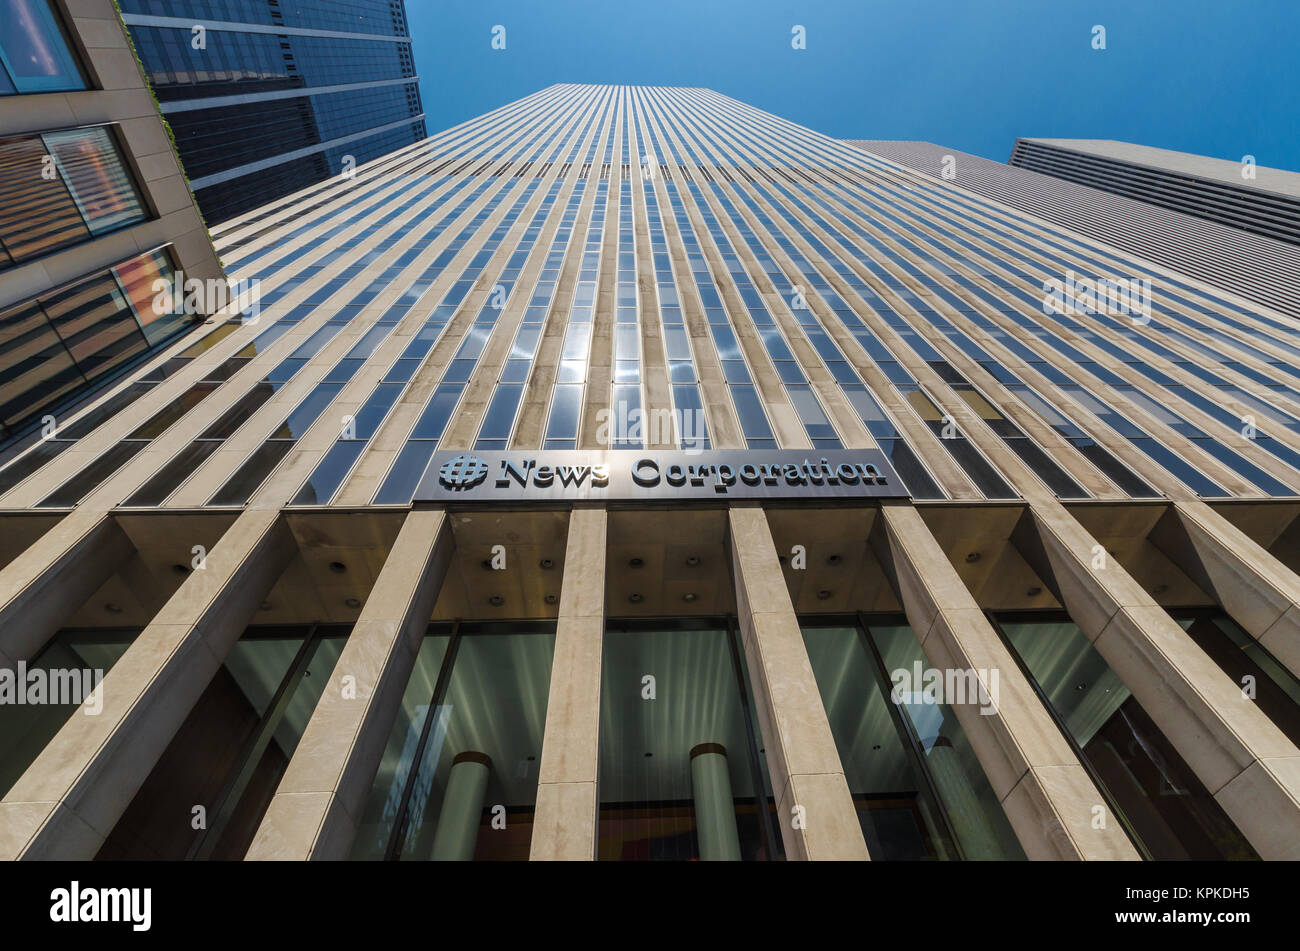 NEW YORK CITY - JULY 12: News Corporation headquarters building on July 12, 2012 in New York City. News Corp. is an American diversified multinational Stock Photo